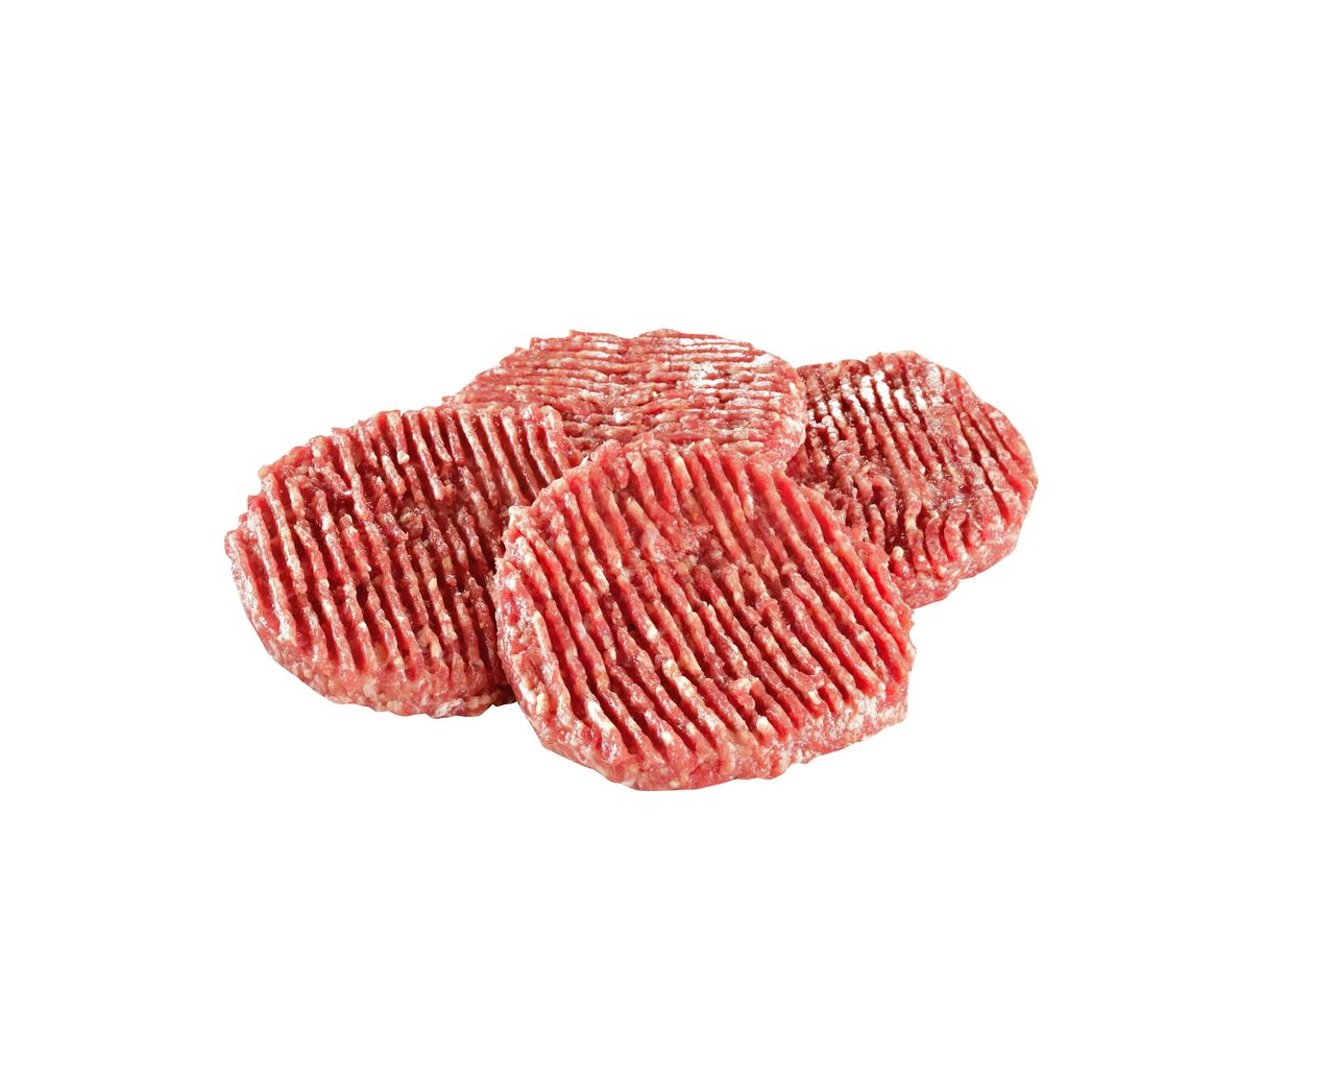 METRO Premium - Porco Iberico Burger tiefgefroren, roh, 6 Stück à 200 g, vak.-verpackt 1,2 kg Packung